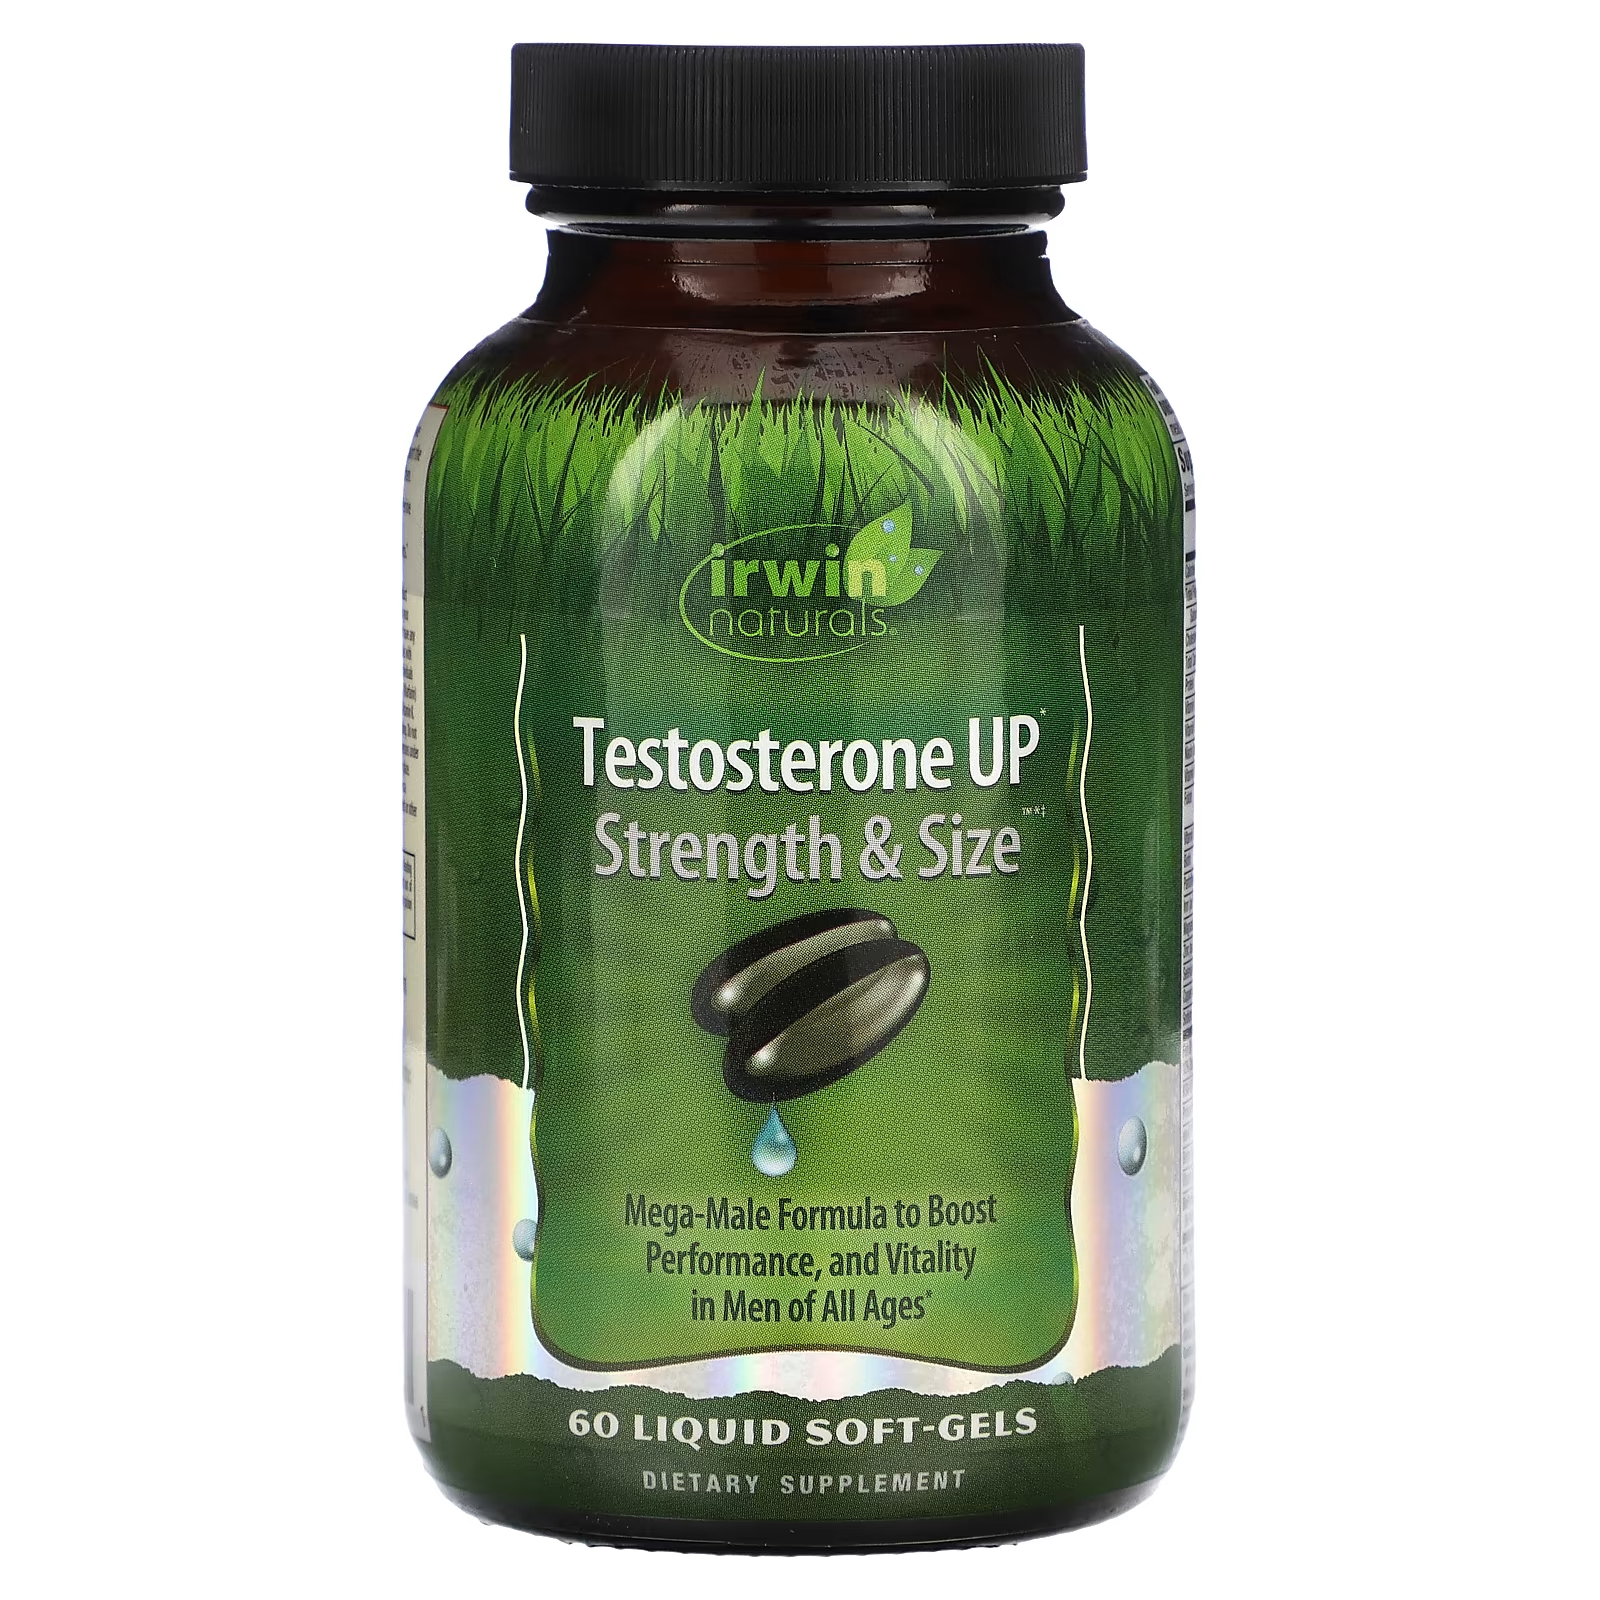 Пищевая добавка Irwin Naturals Testosterone Up Strength & Size, 60 жидких таблеток gat testrol средство повышение уровня тестостерона 60 таблеток